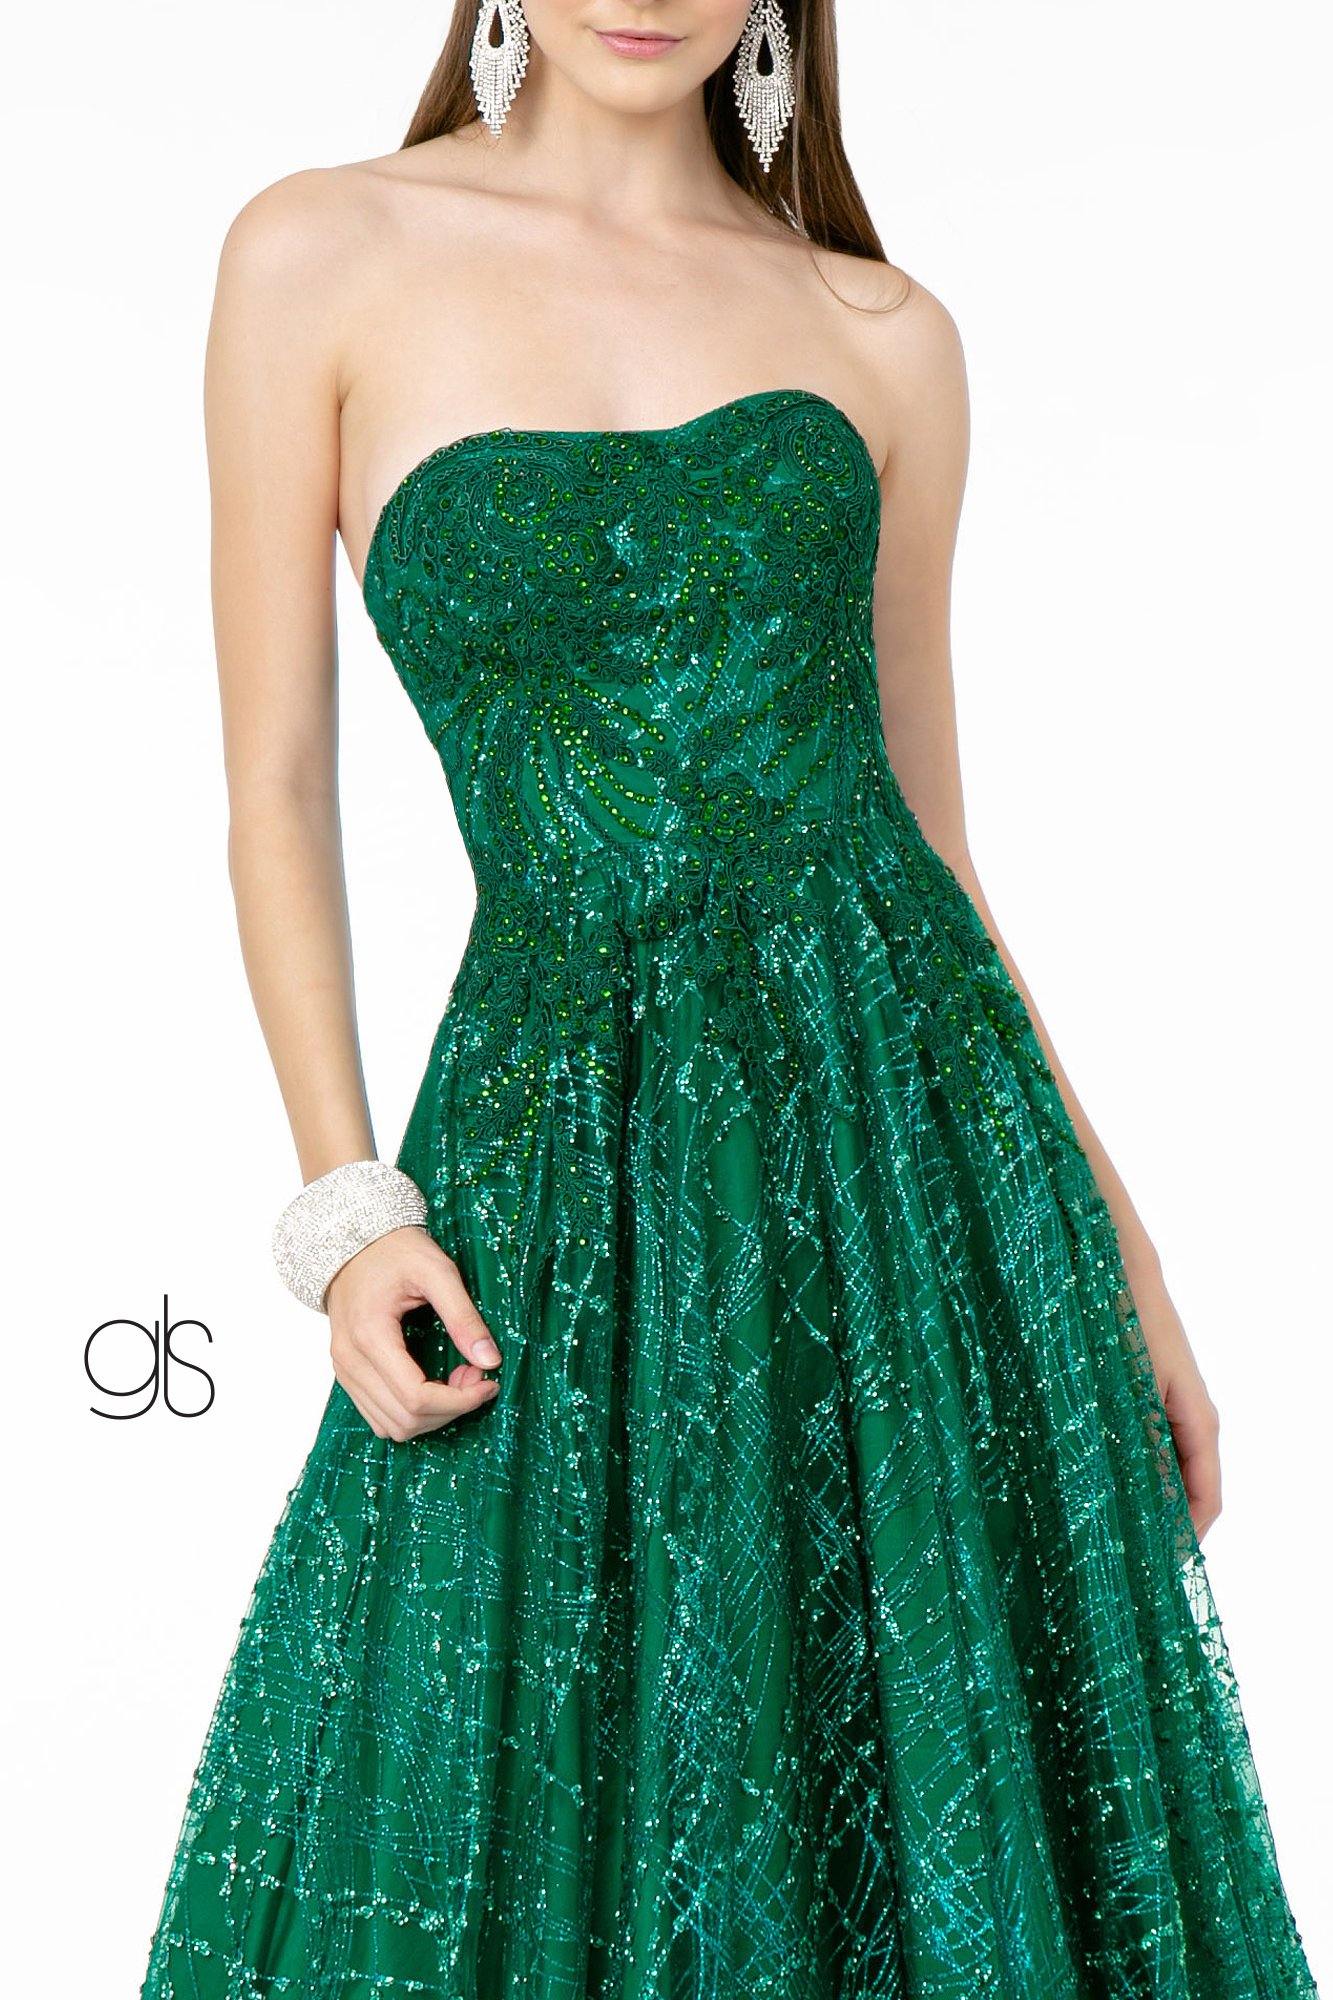 Glitter Mesh A-Line Long Prom Dress - The Dress Outlet Elizabeth K